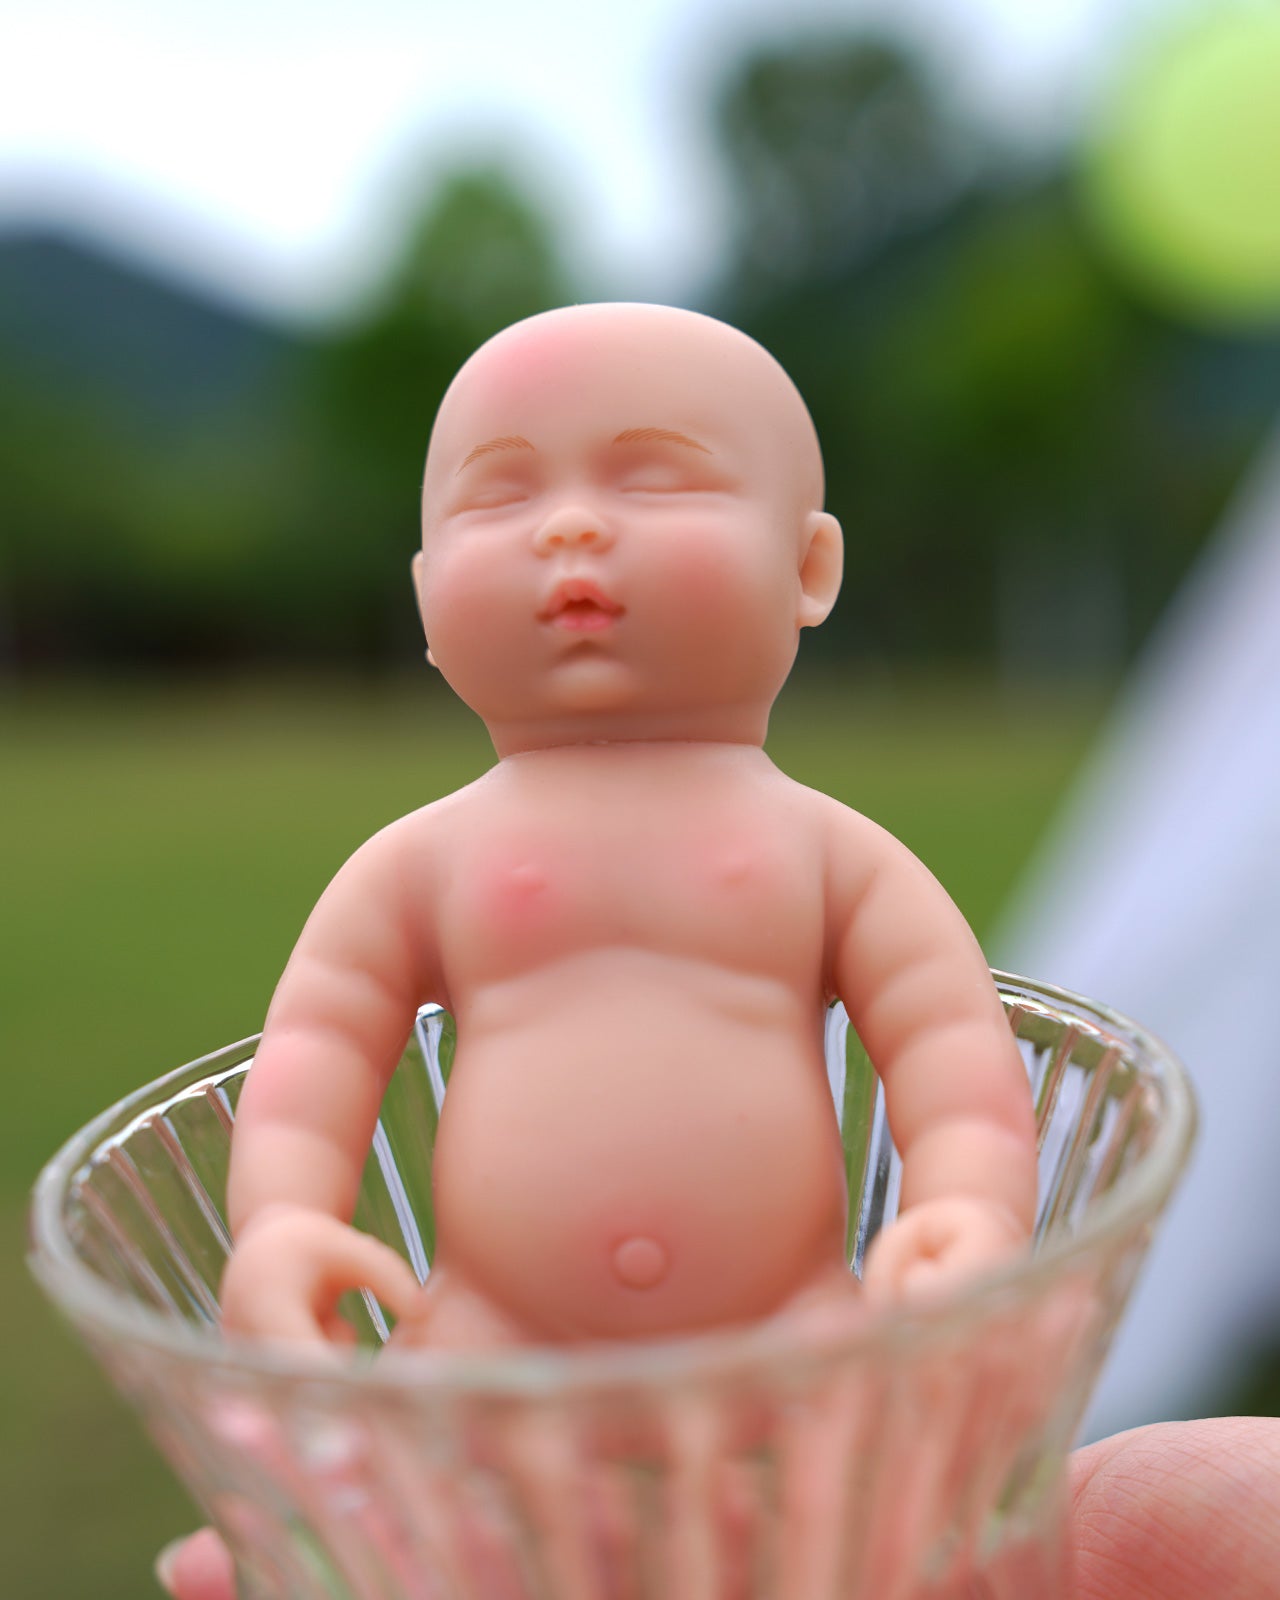 Lvy - 6" Full Silicone Reborn Baby Dolls Bouncy Newborn Girl With Flexible Waterproof Body